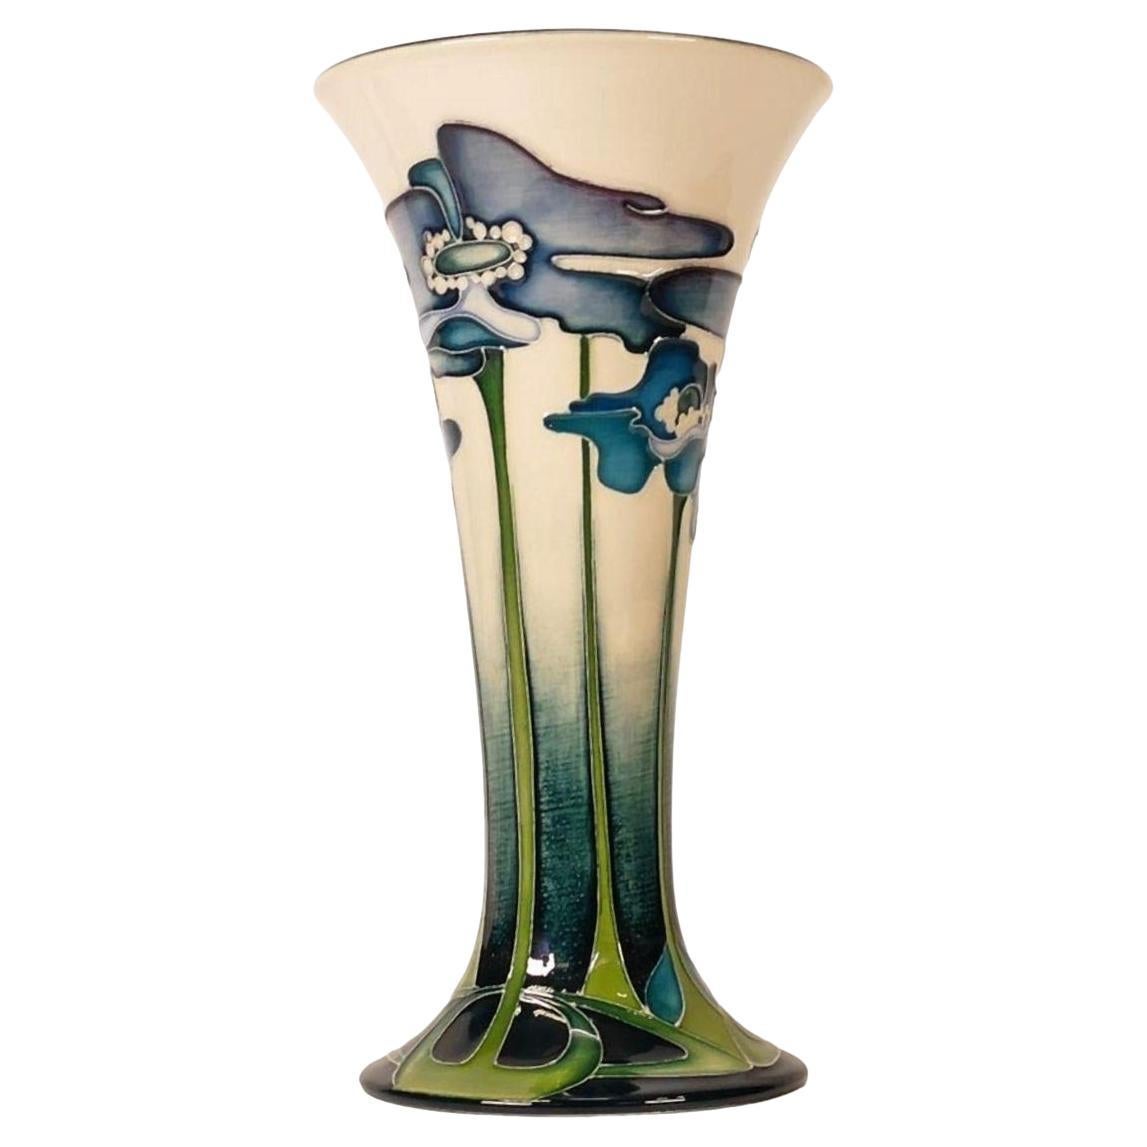 Blaue Heaven TRIAL-Vase von MOORCROFT,  Nicola Slaney datiert 4.11.09 BOXED